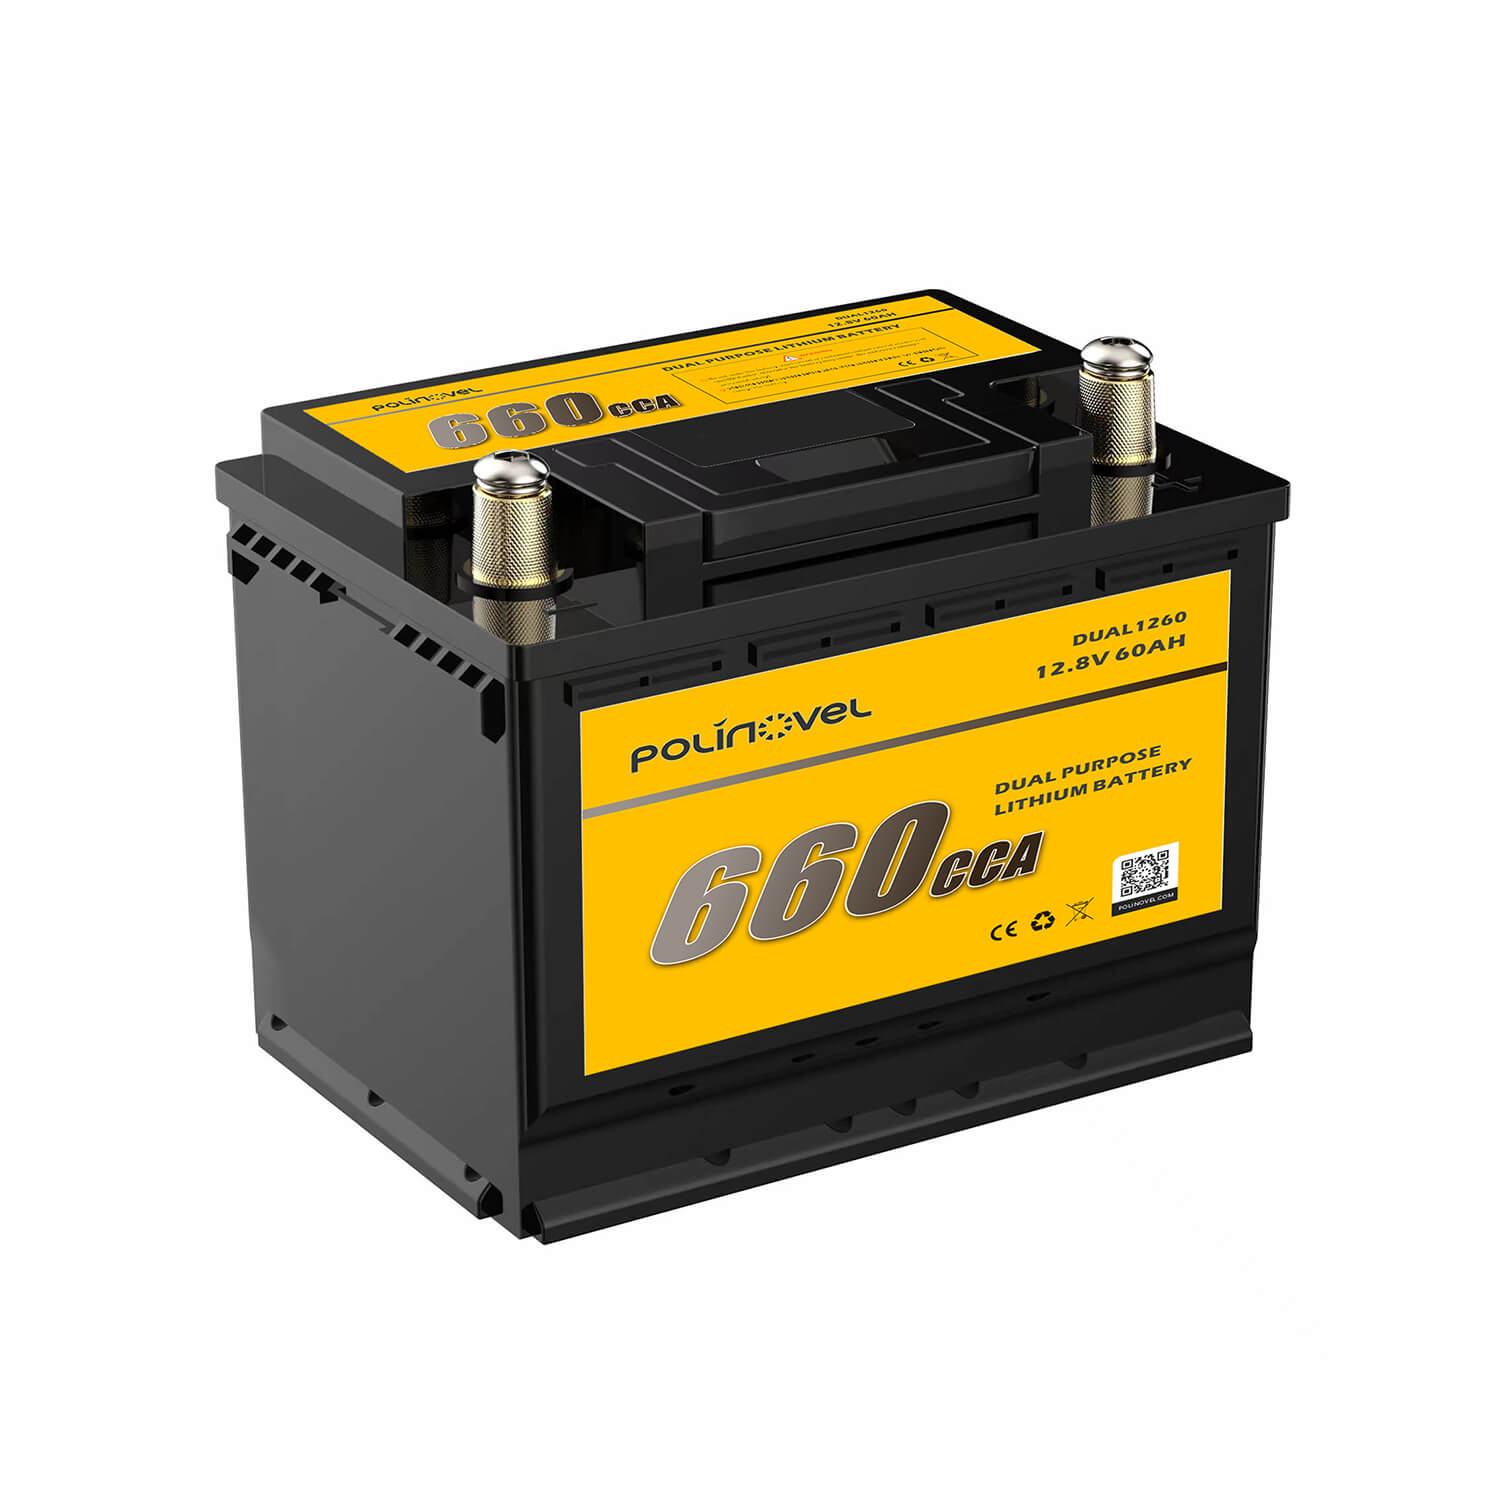 DUAL1260 Dual Purpose Lithium Battery